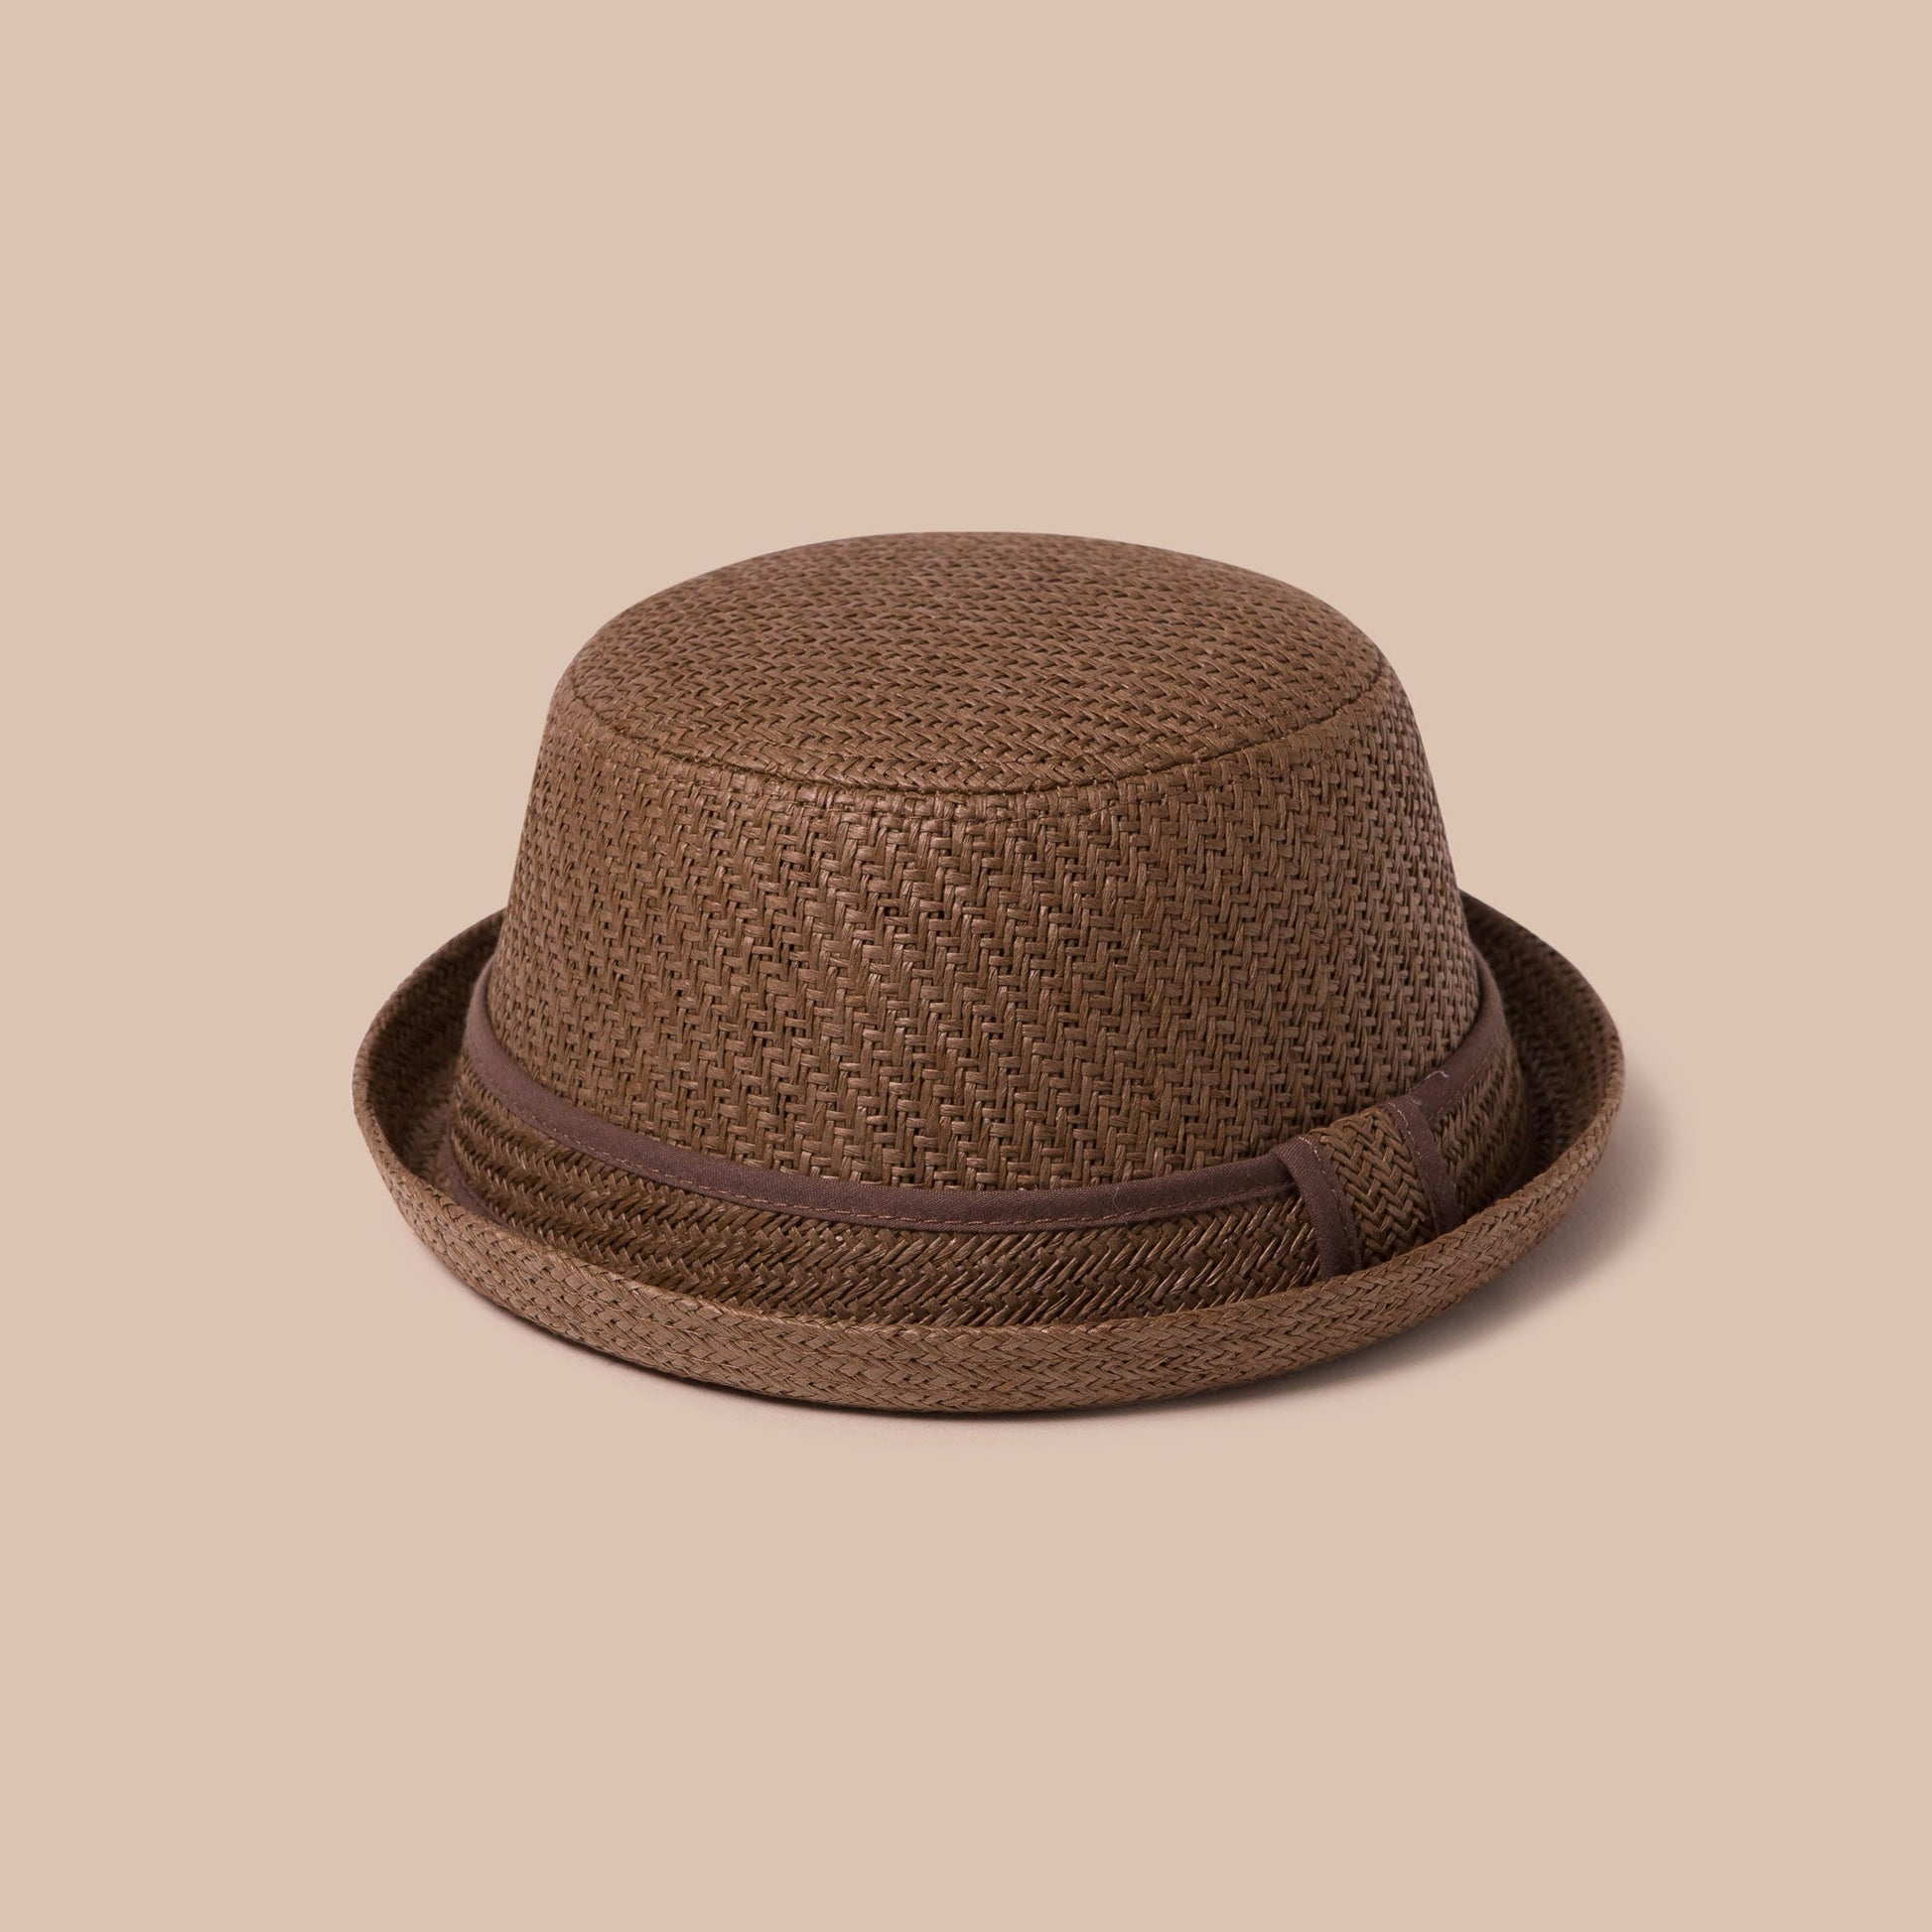 Adjustable Sun Hat Straw Boater Hat Brown